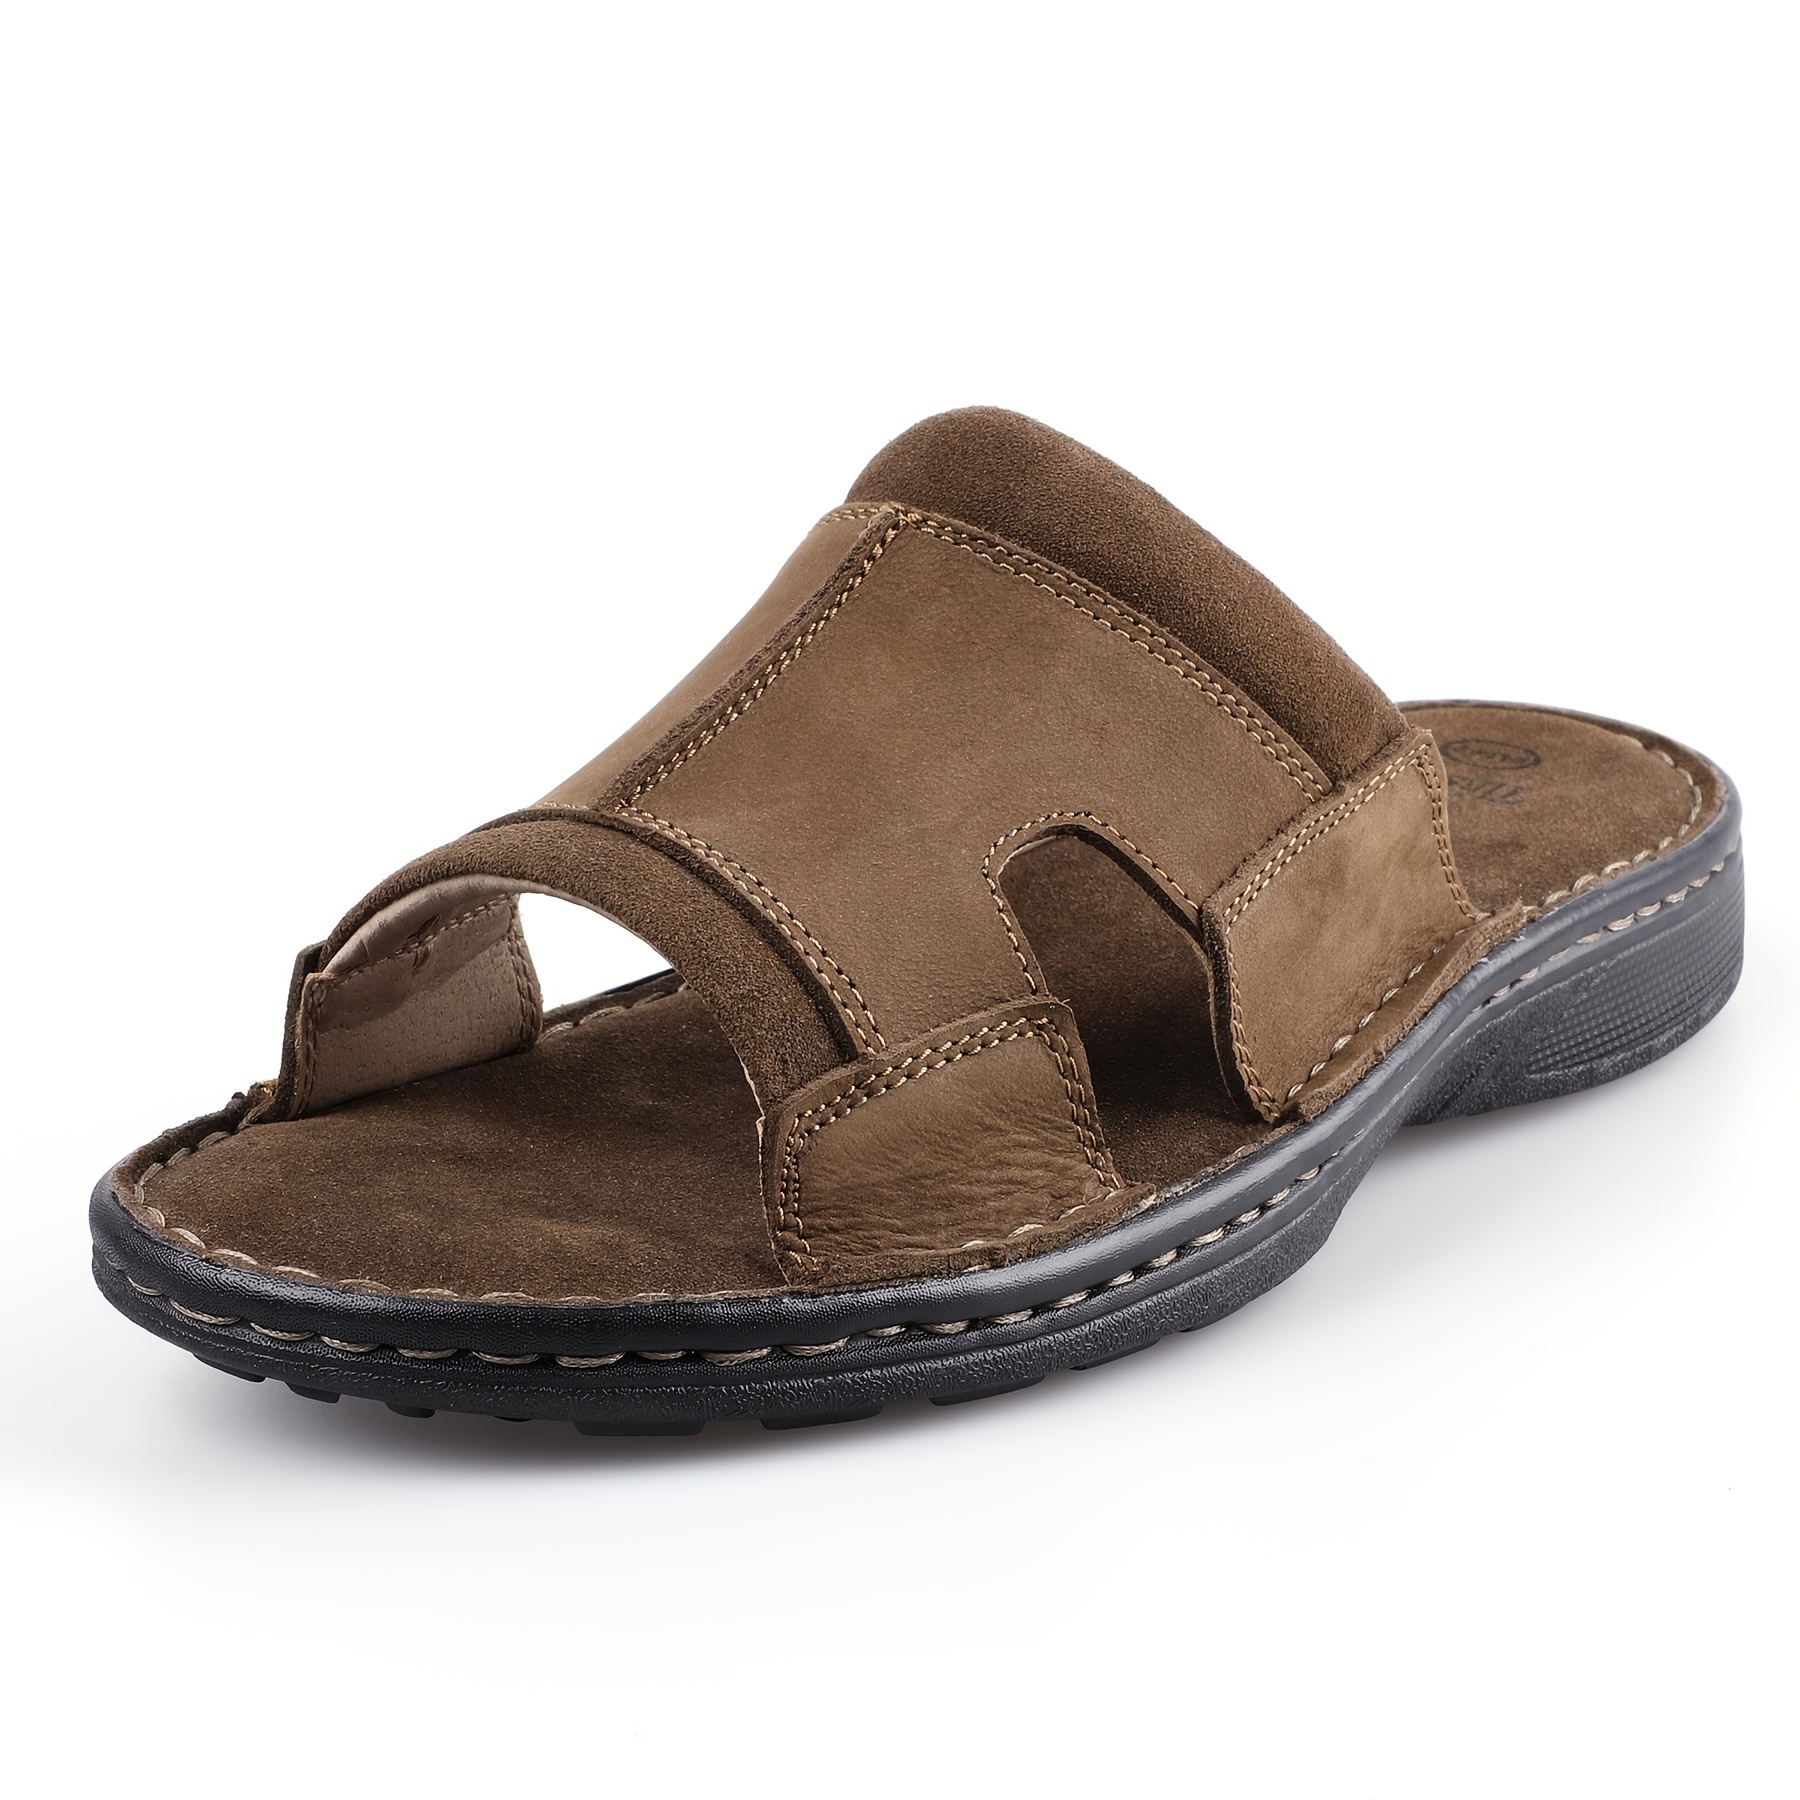 Men's Leather Slide Sandals | Memory Foam | Moisture Wicking | Non-slip Sole | Our Store